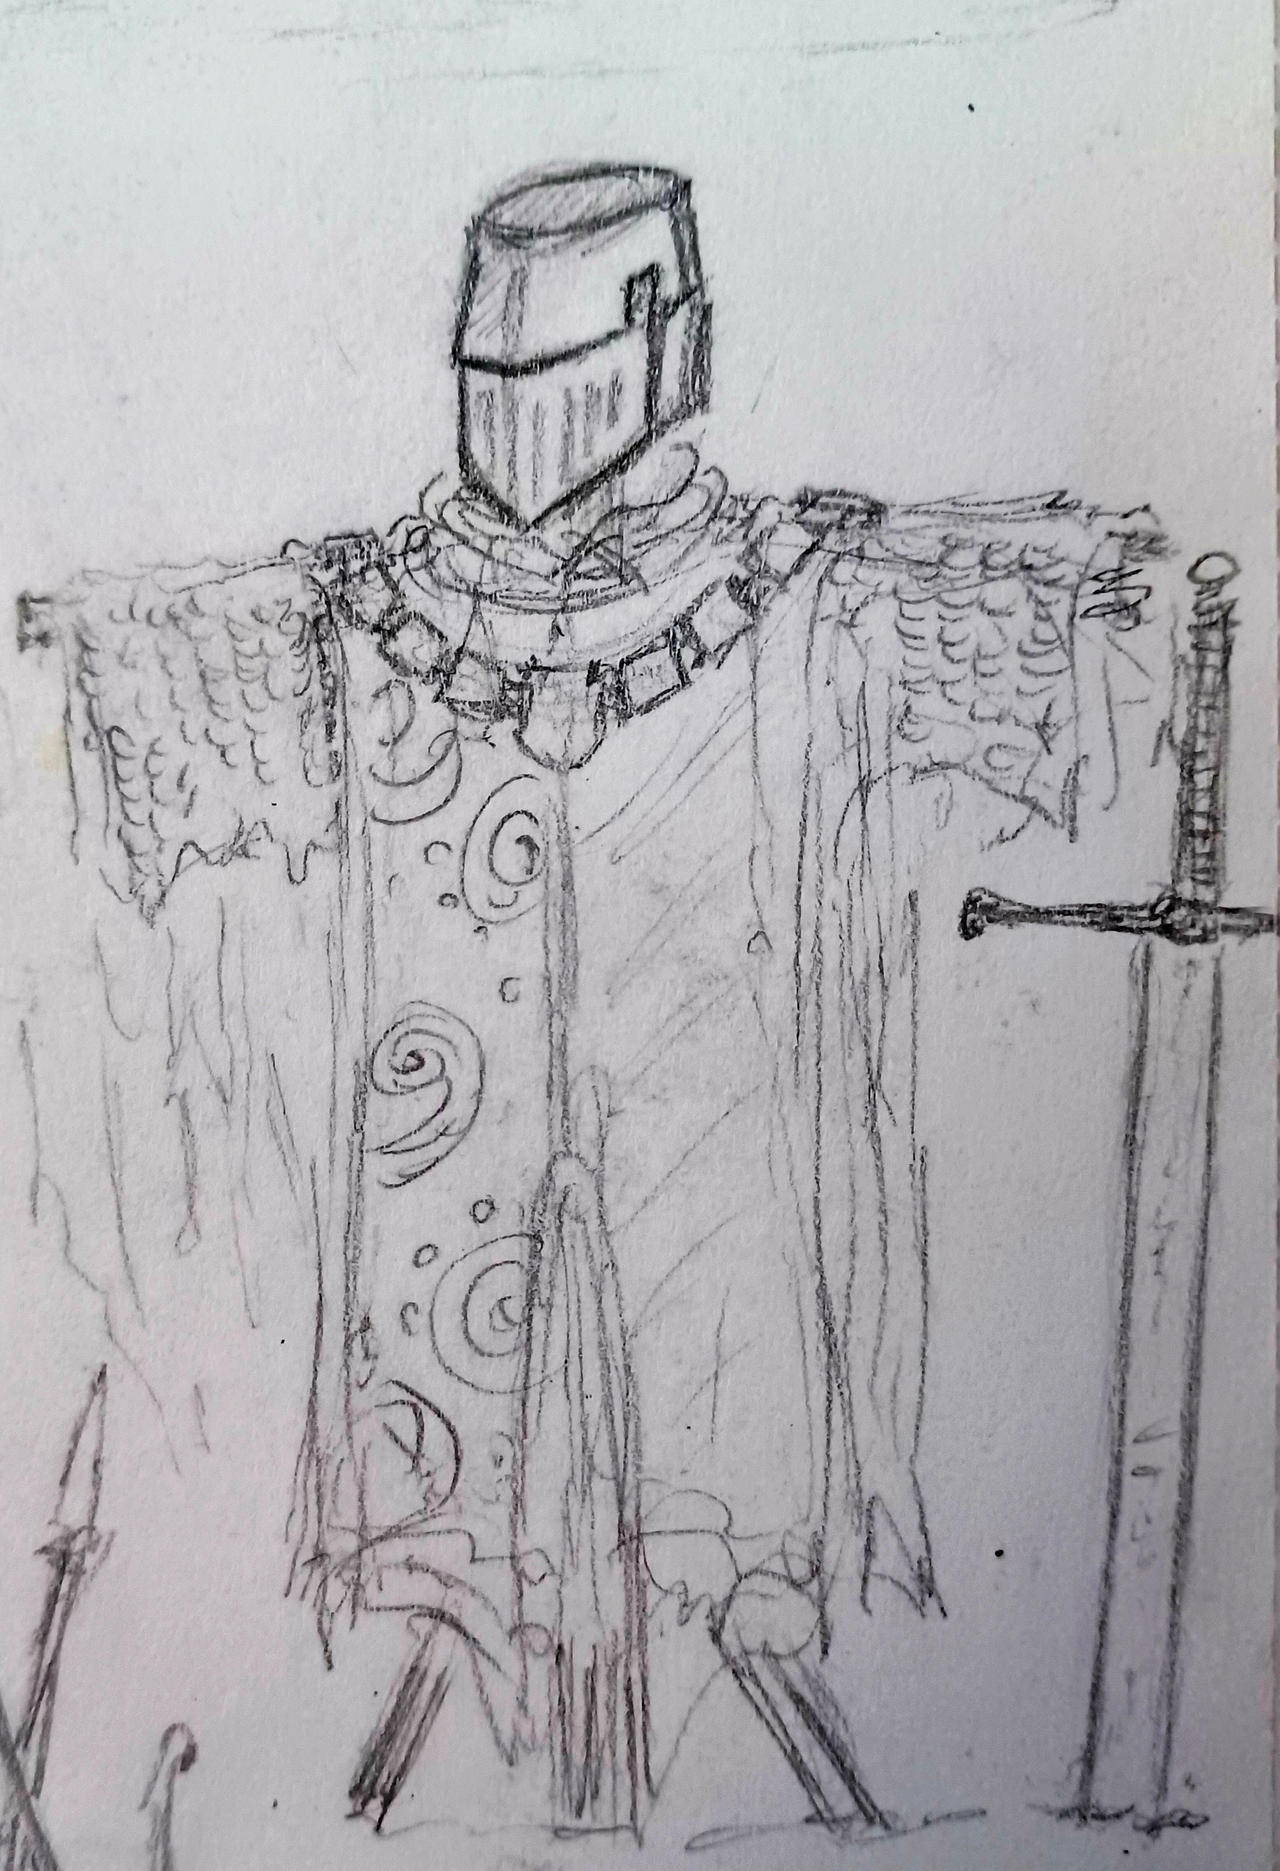 Heroic knight. by skilltwins on DeviantArt